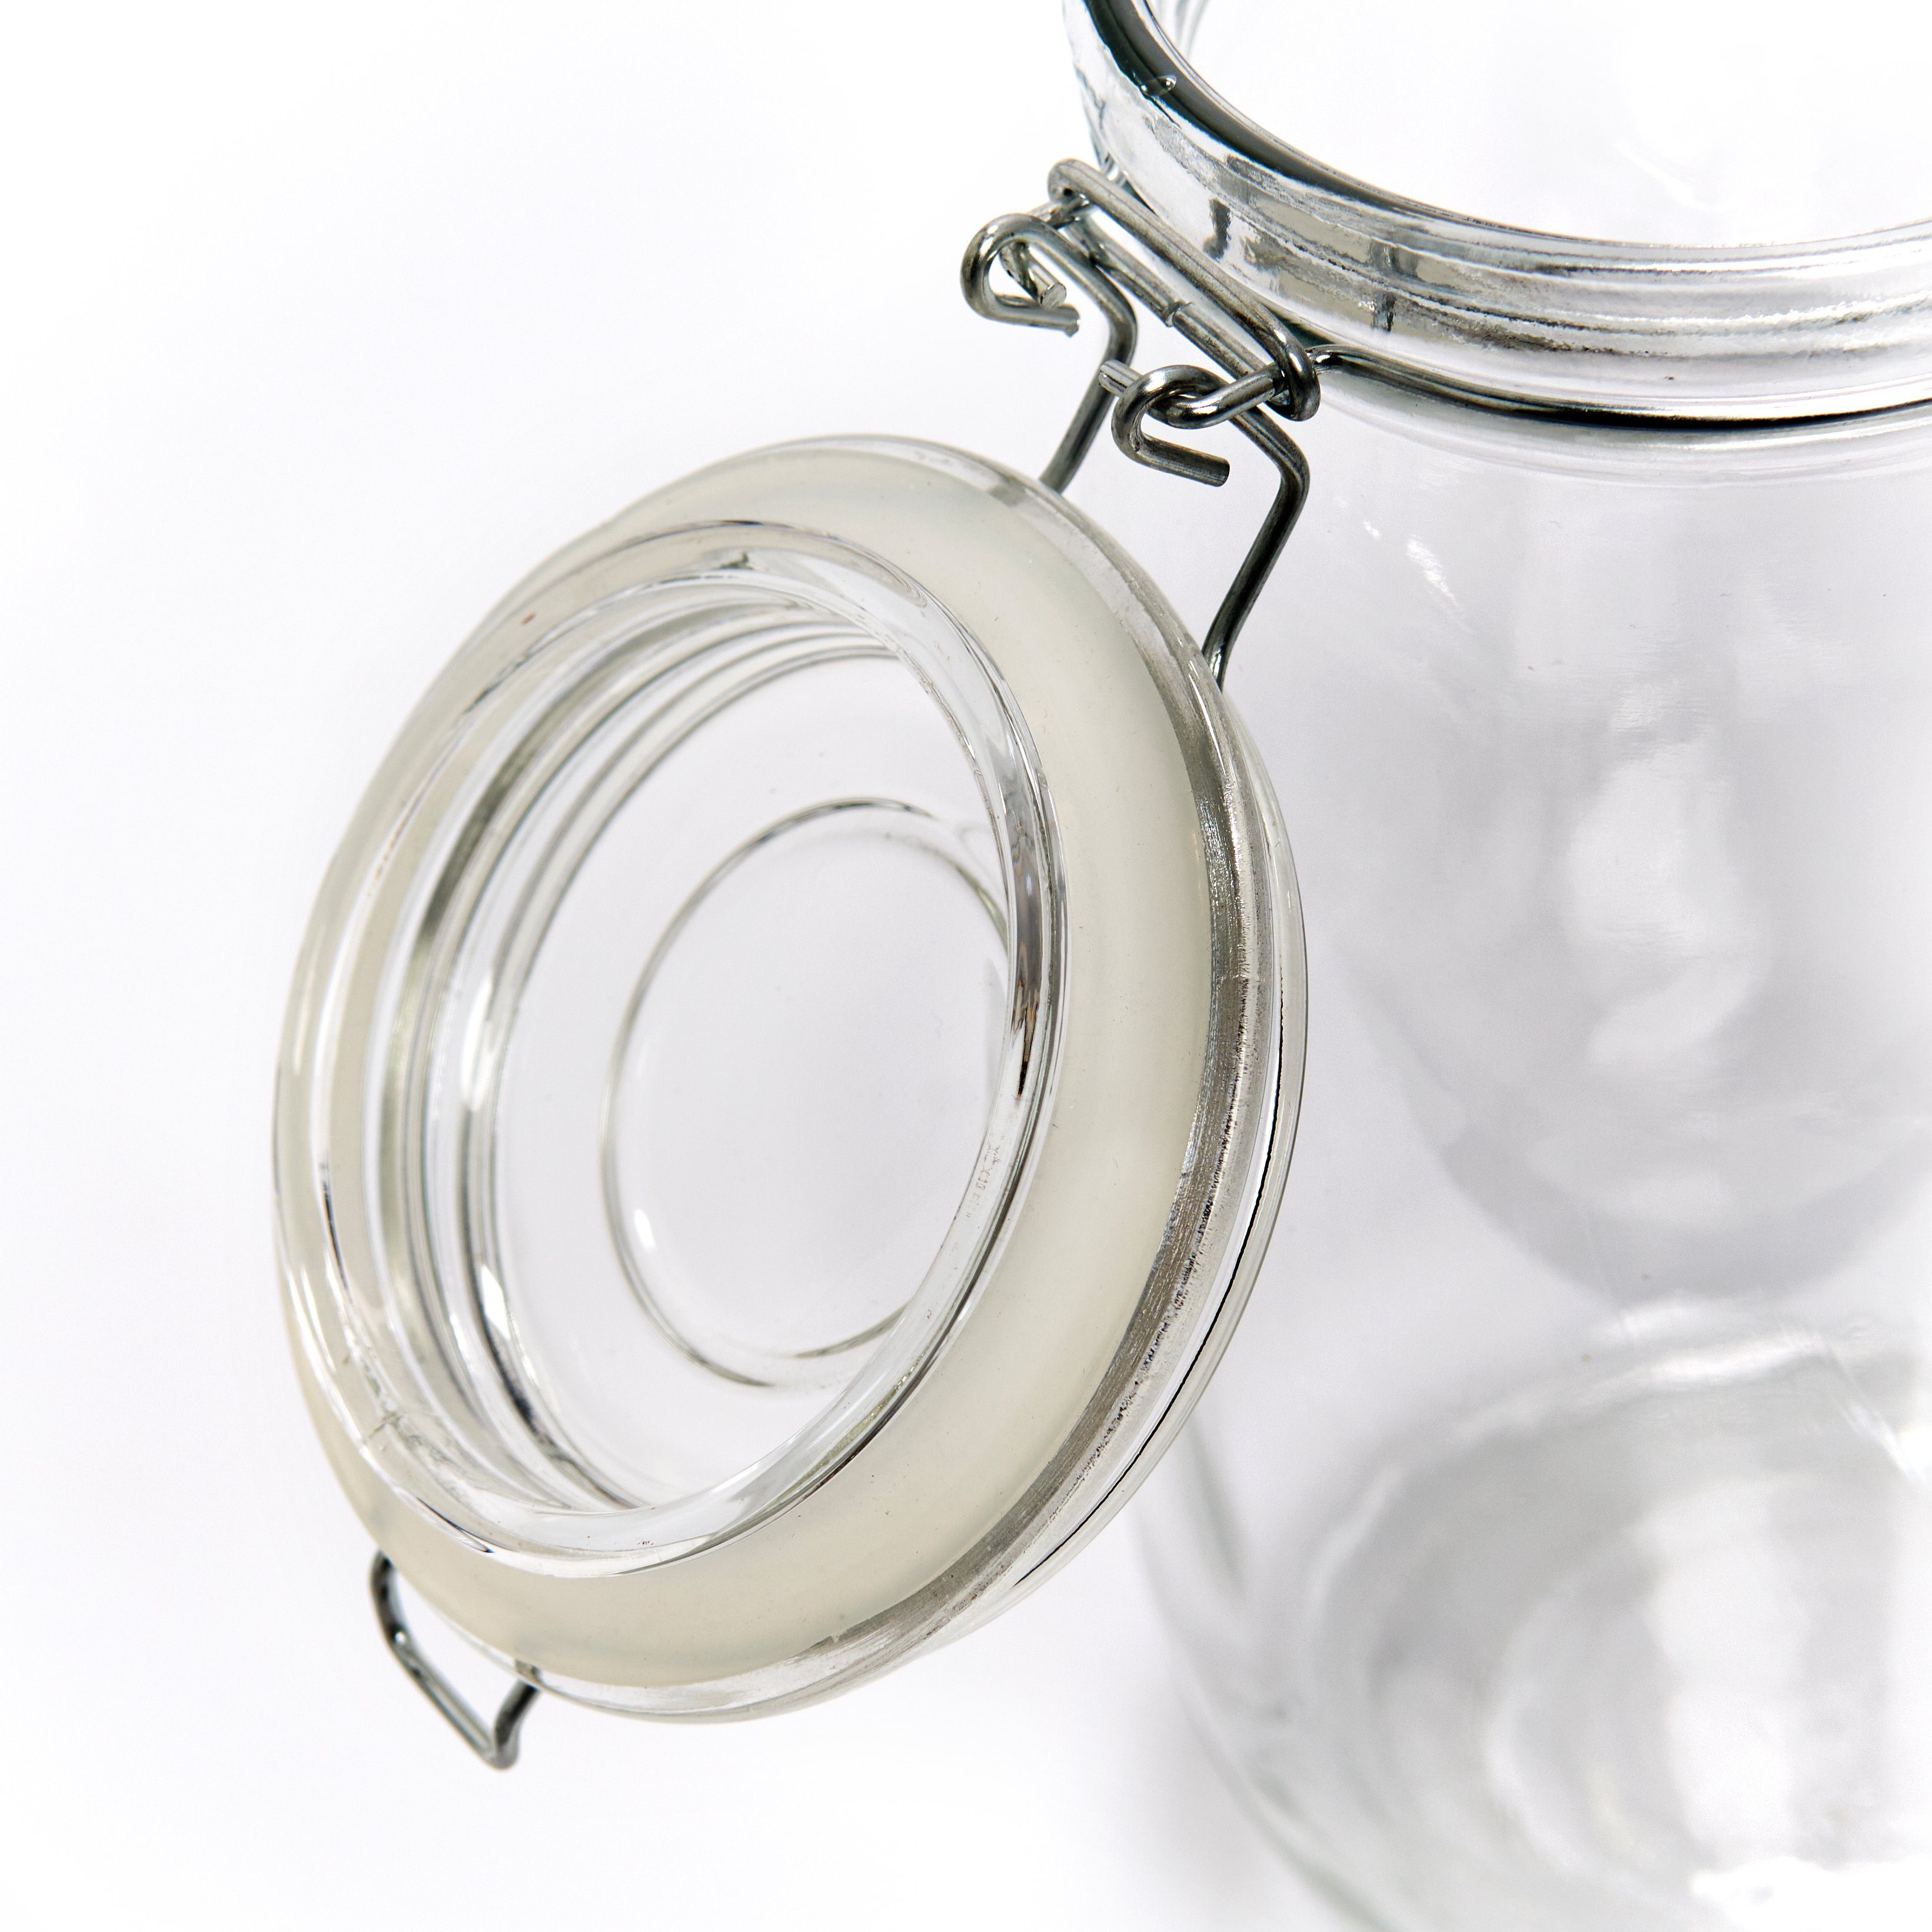 Bügelverschluss, Present transparent, Vorratsglas 1000 ml, 17 Glas/Edelstahl, Vorratsglas cm m. Zeller Glas/Edelstahl, x Ø11